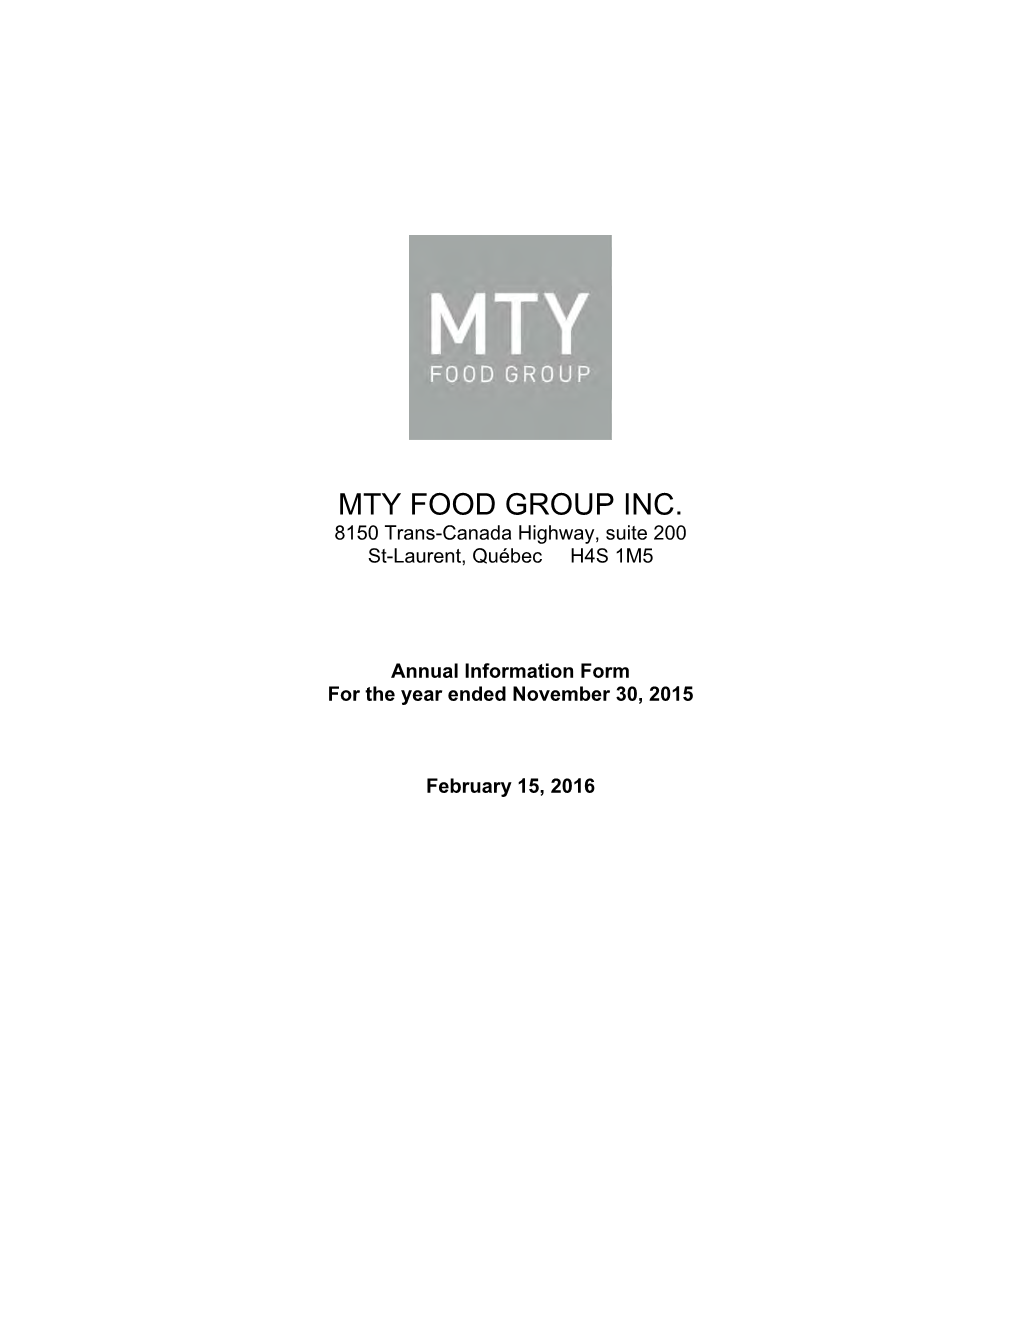 MTY FOOD GROUP INC. 8150 Trans-Canada Highway, Suite 200 St-Laurent, Québec H4S 1M5